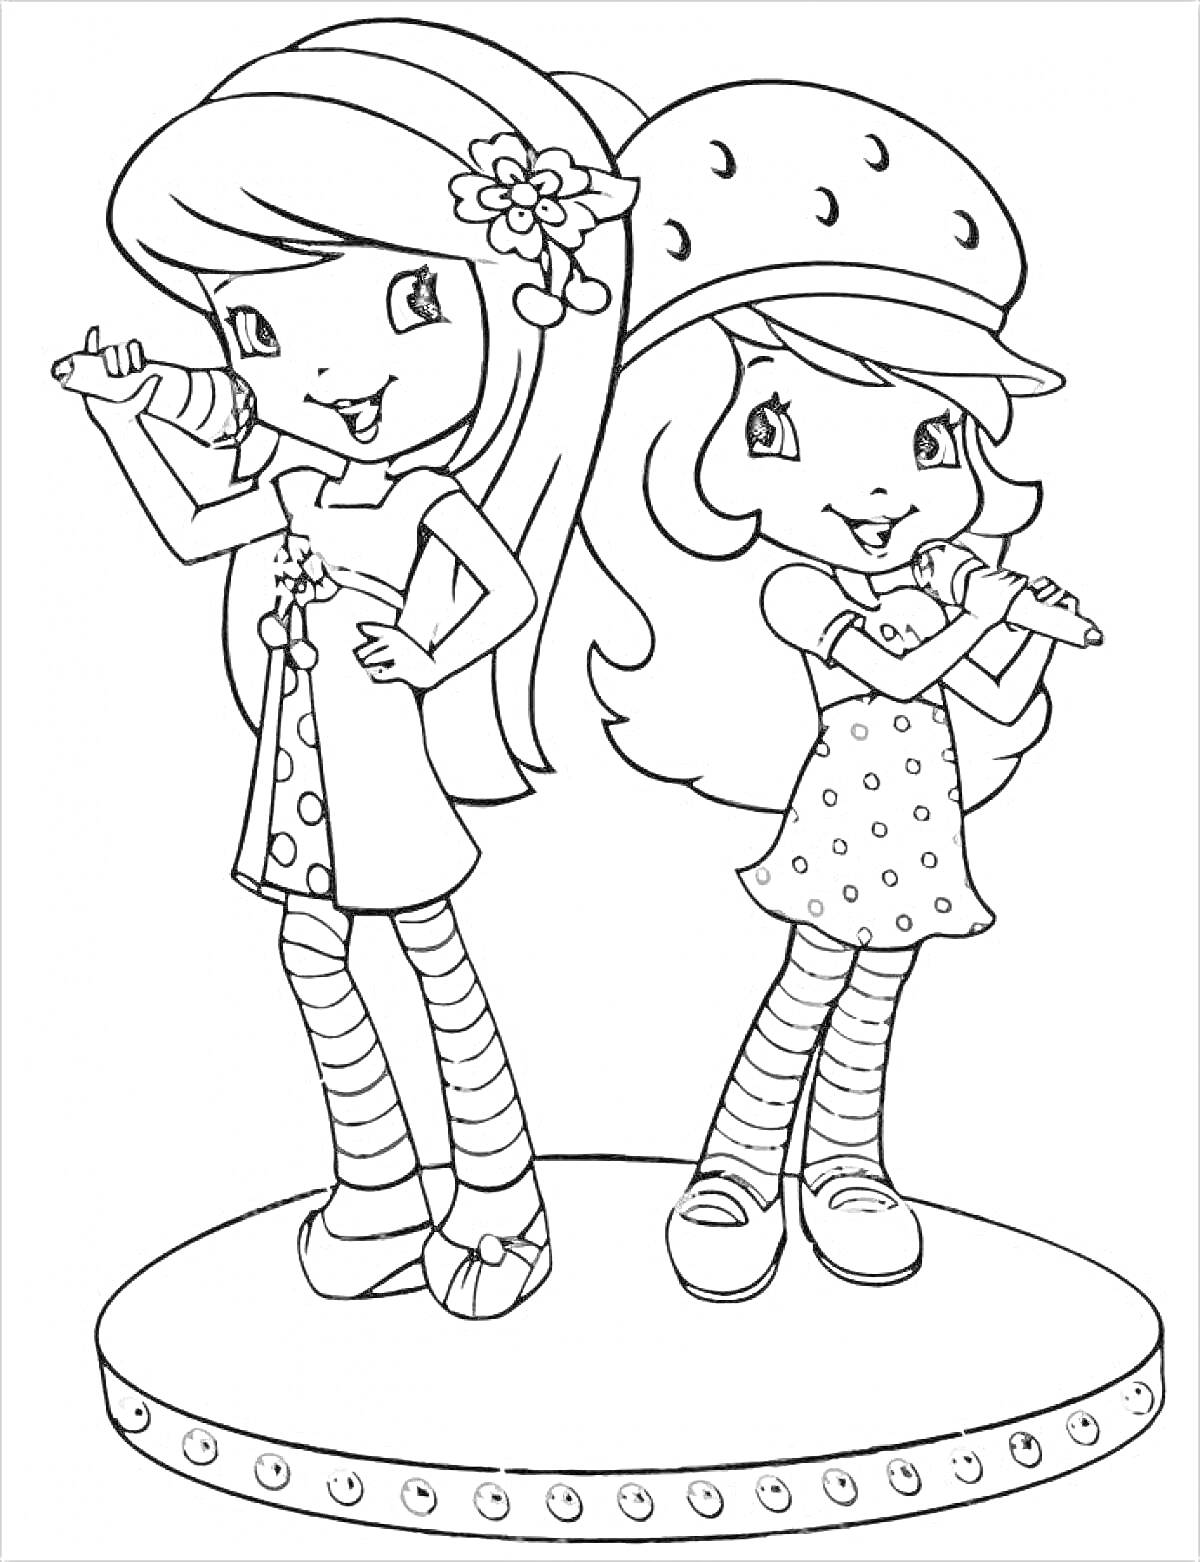 Раскраска две девочки с микрофонами на сцене, клубничка на головном уборе